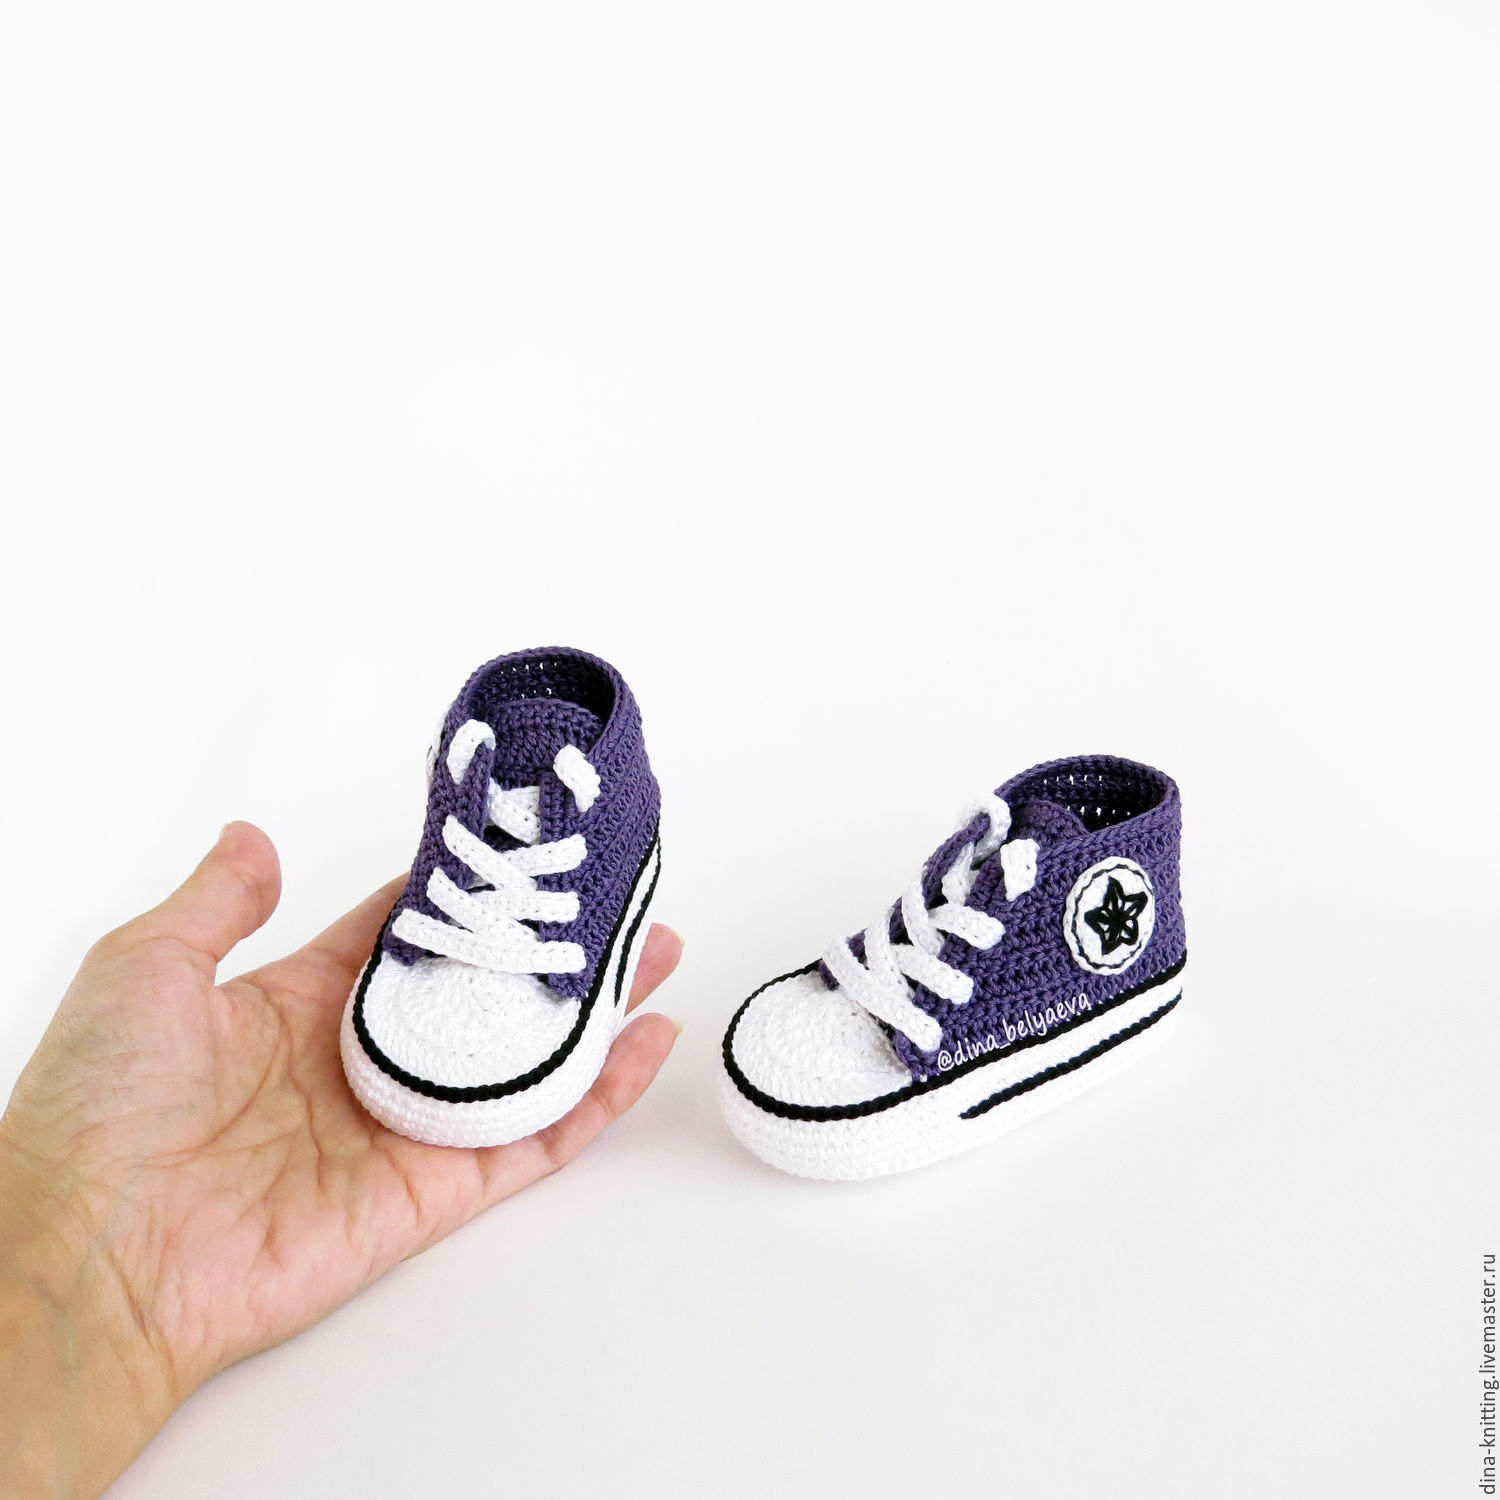 purple baby converse